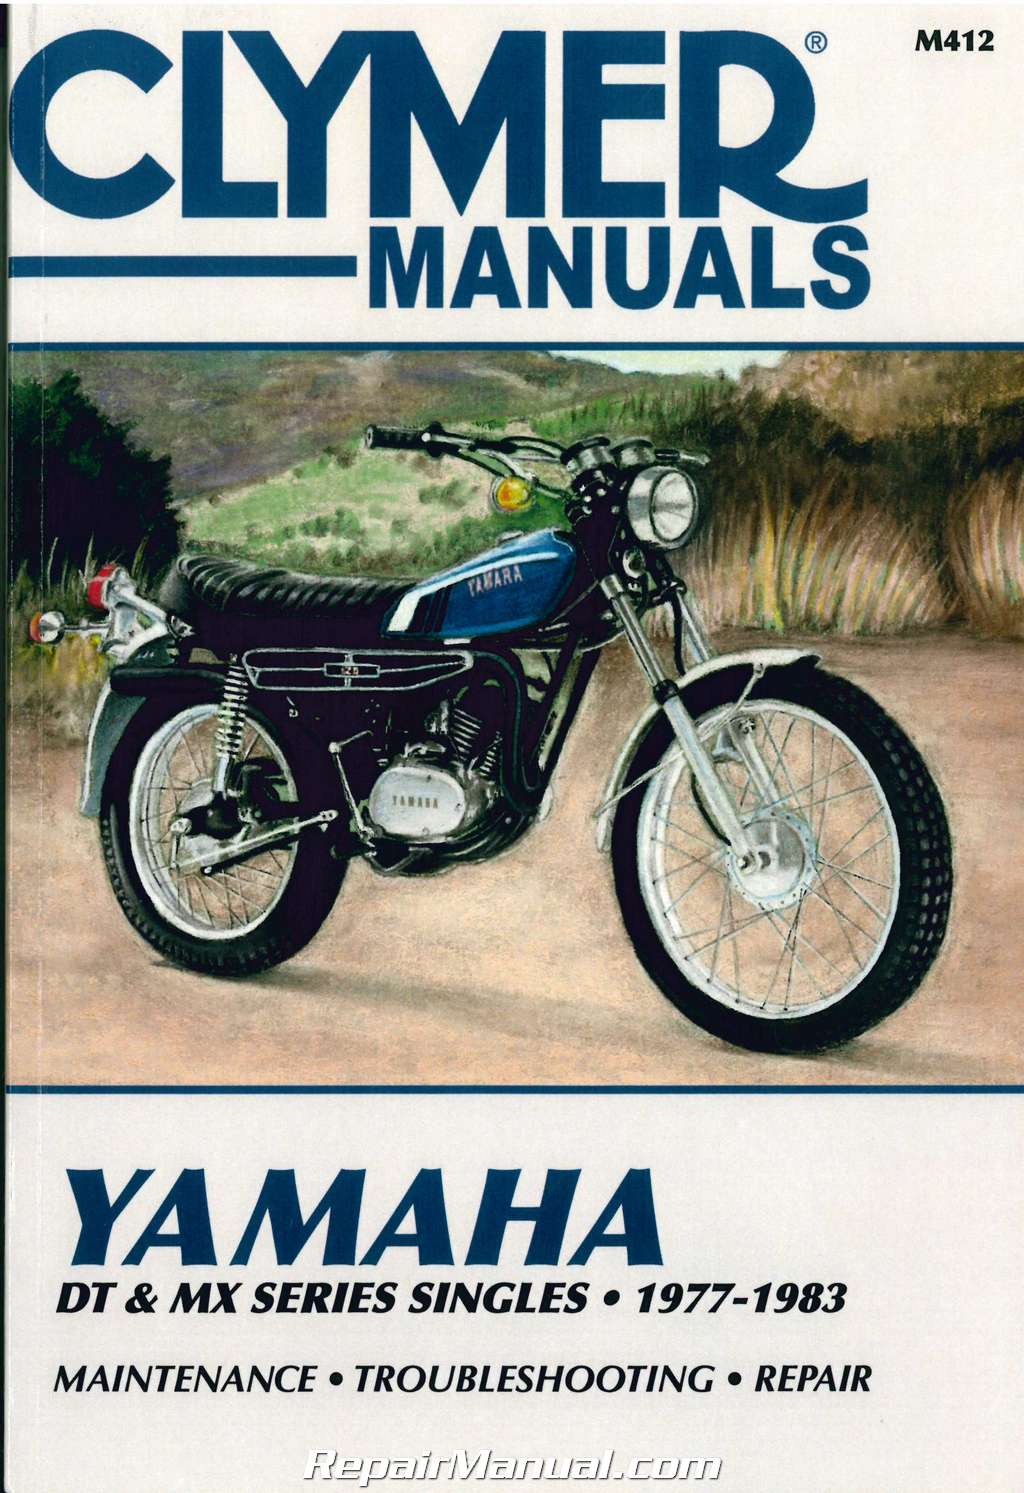 yamaha dt175 performance exhaust